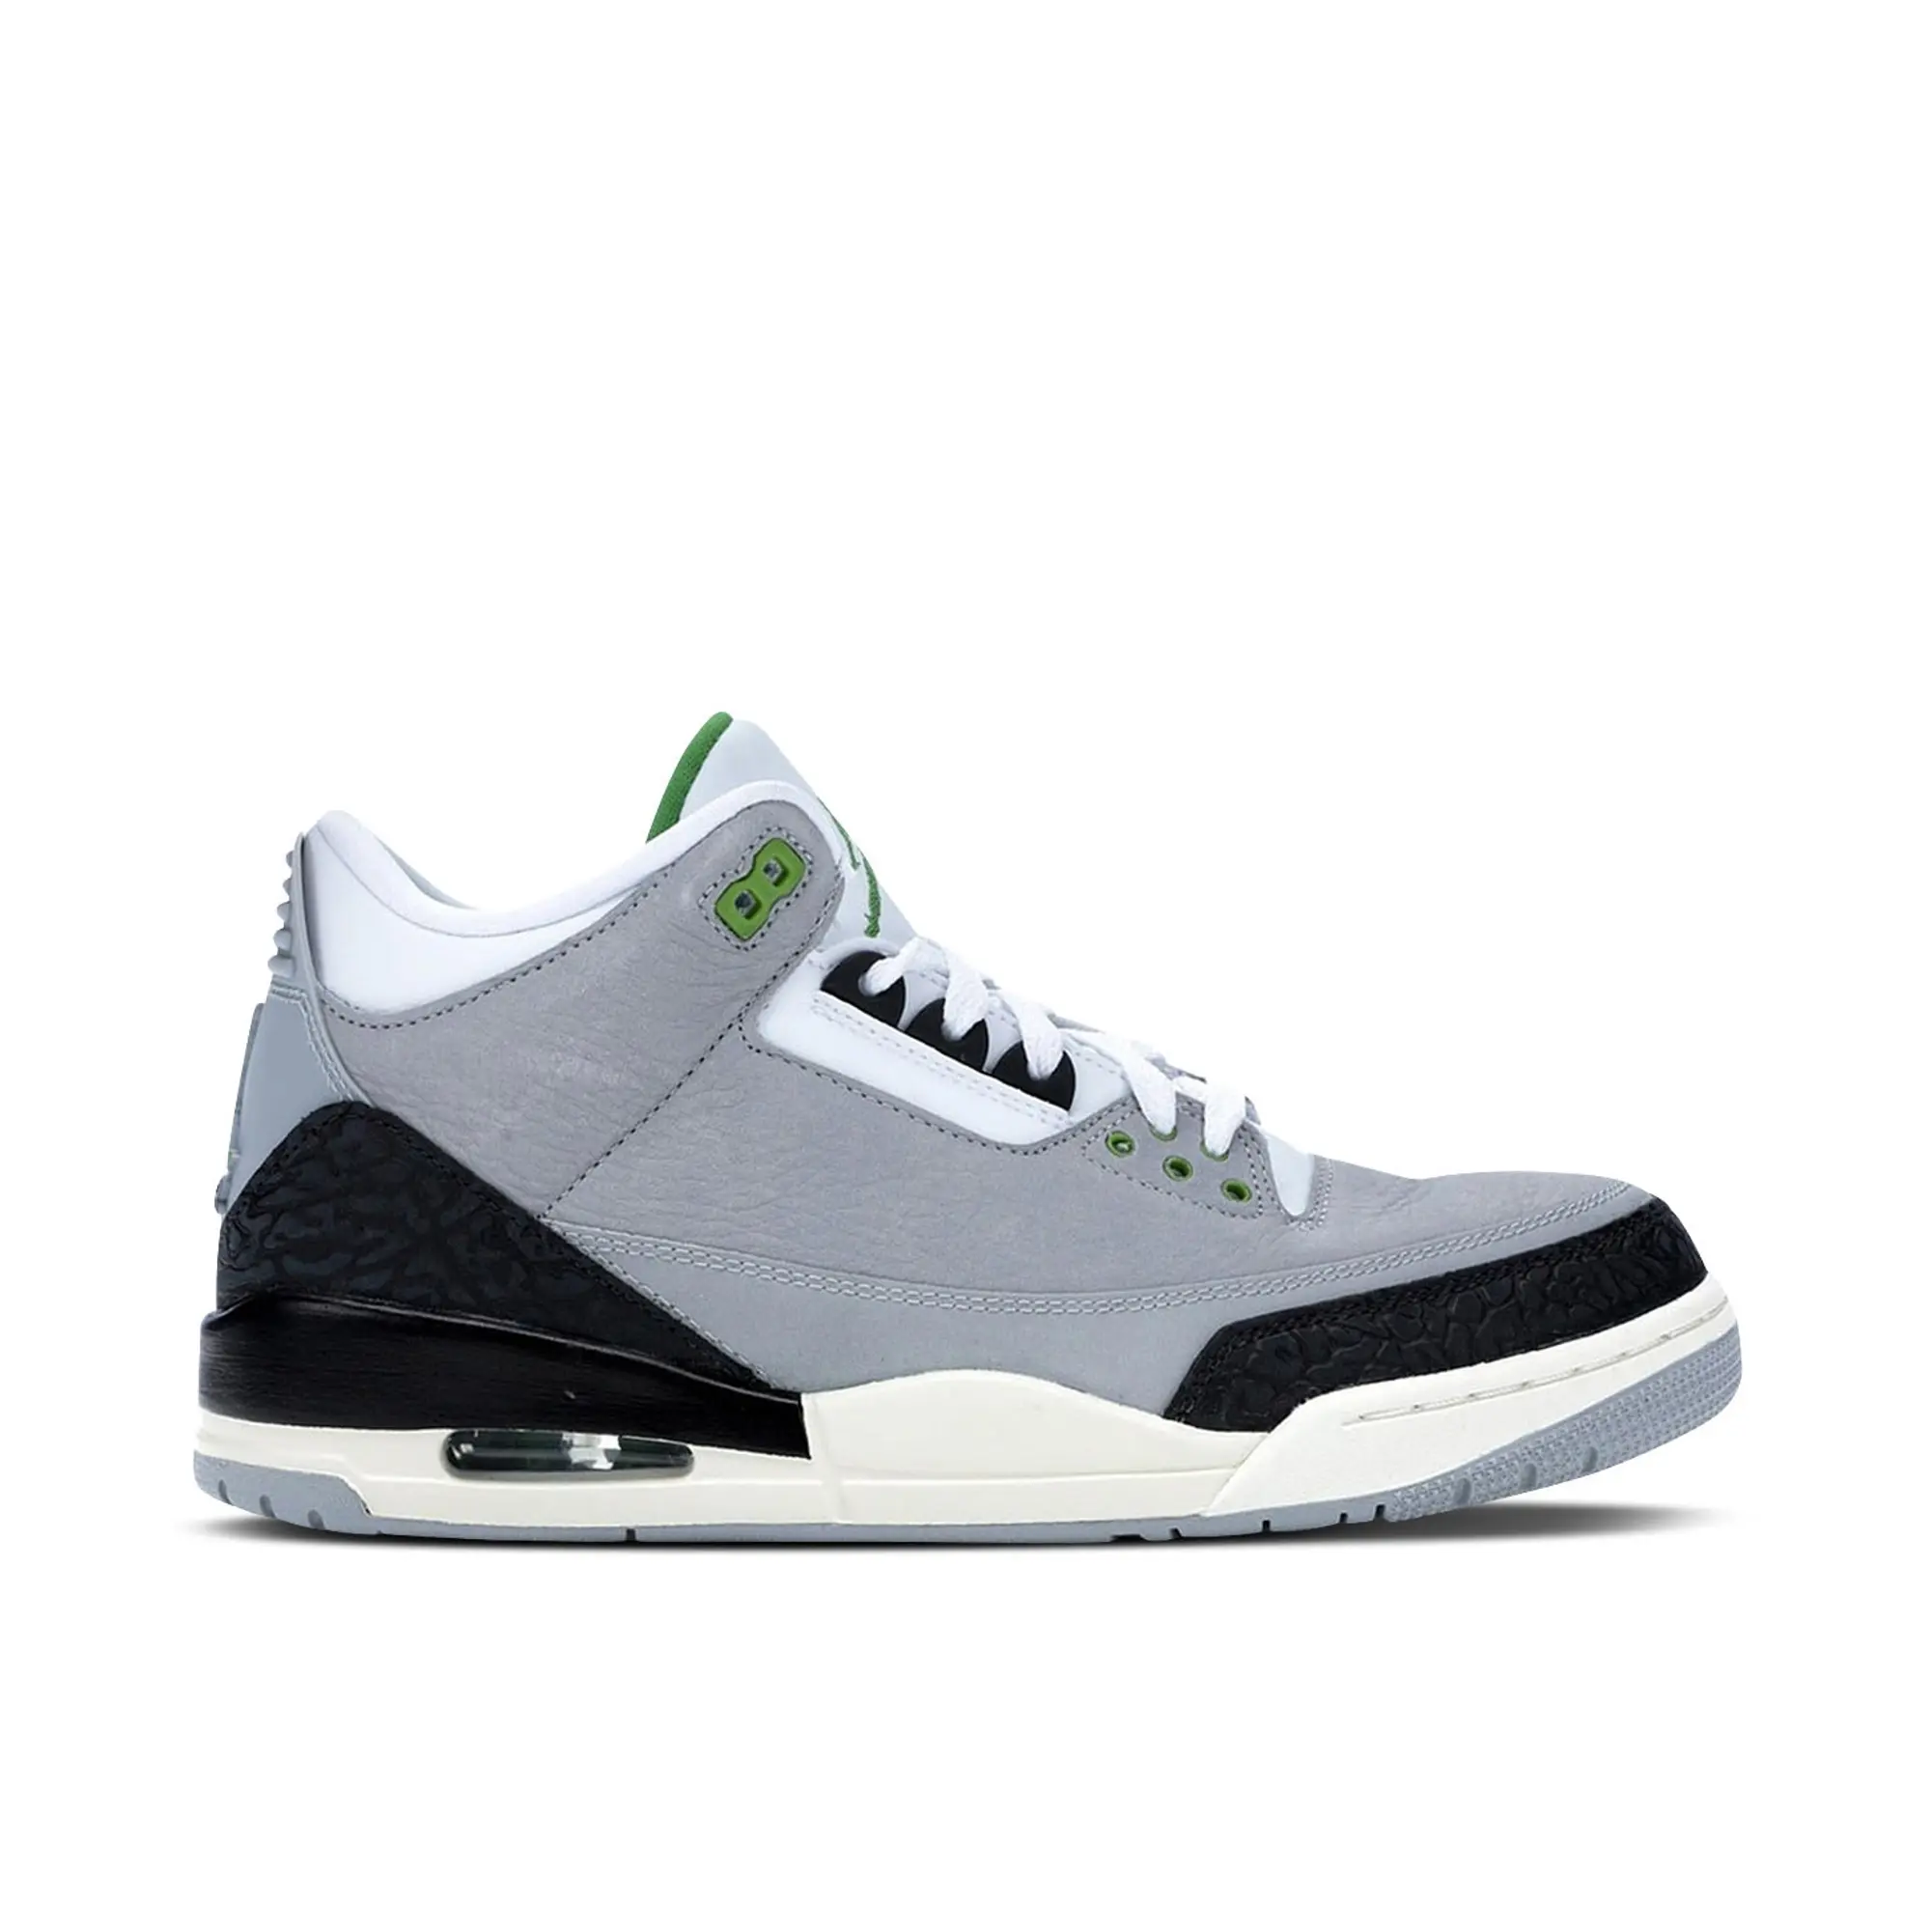 Nike Air Jordan 3 Retro Chlorophyll Shoes